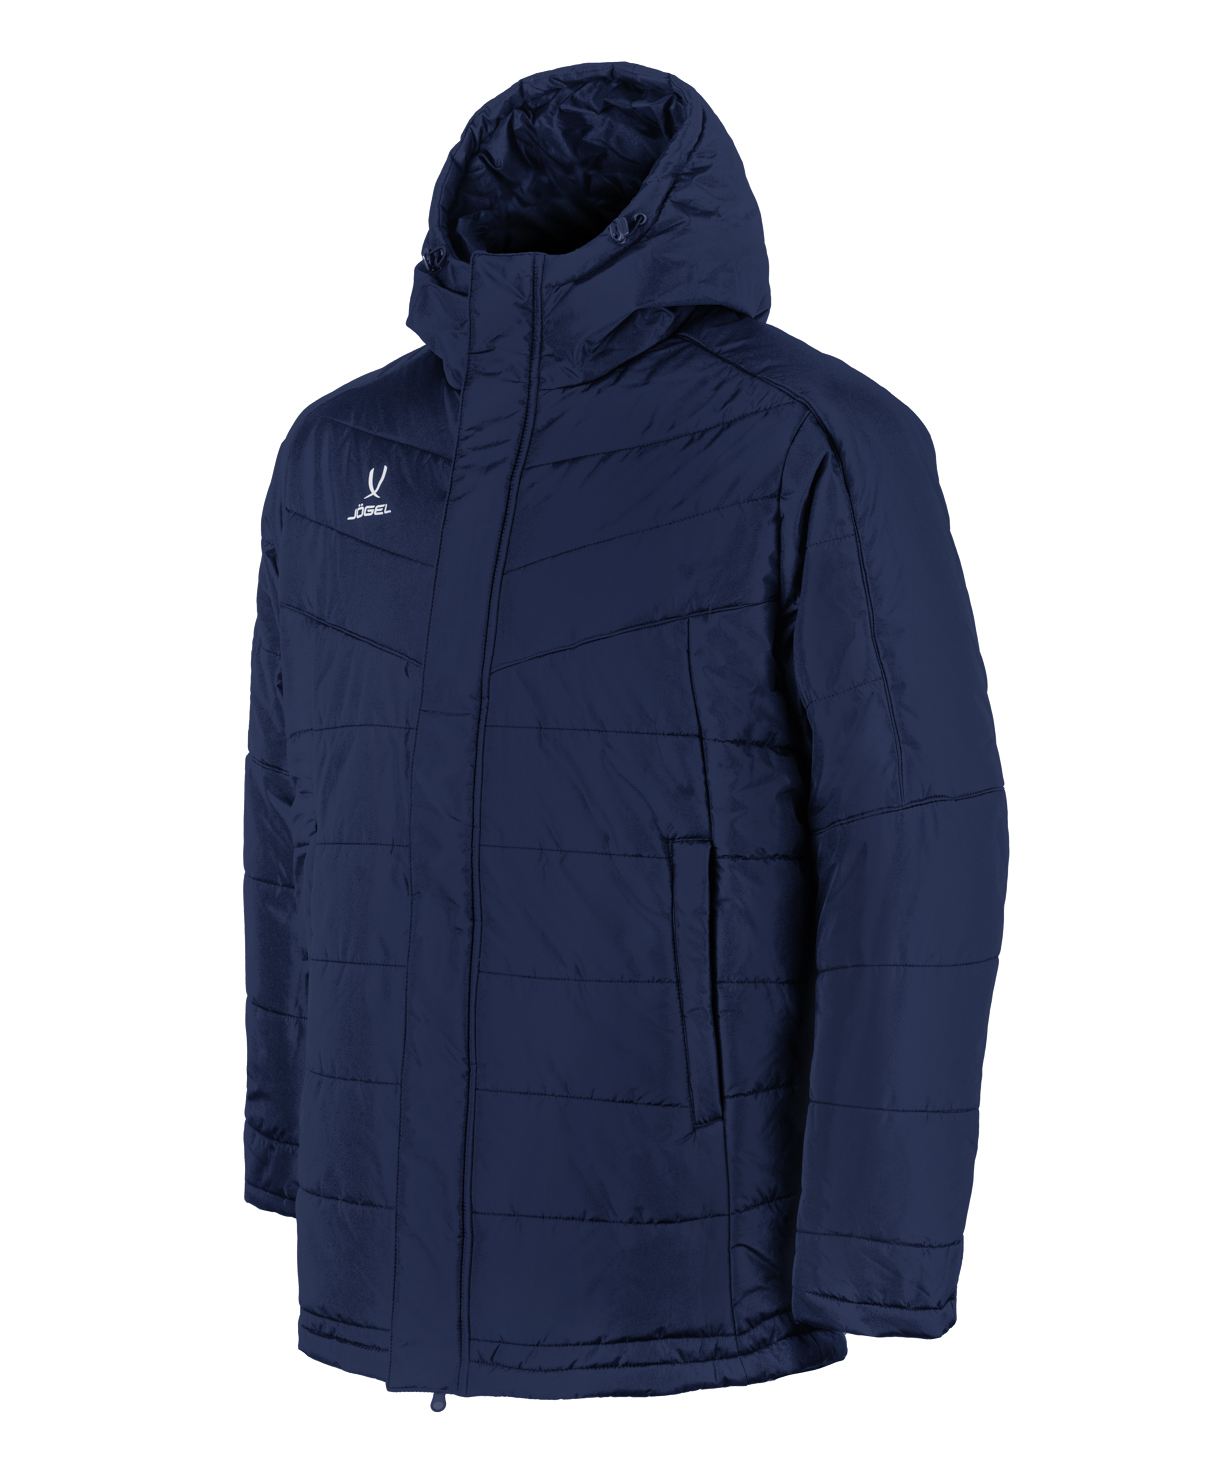 Куртка утепленная Jogel CAMP Padded Jacket, темно-синий, детский - XS УТ-00021070_XS гетры футбольные jogel camp basic socks темно синий серый белый